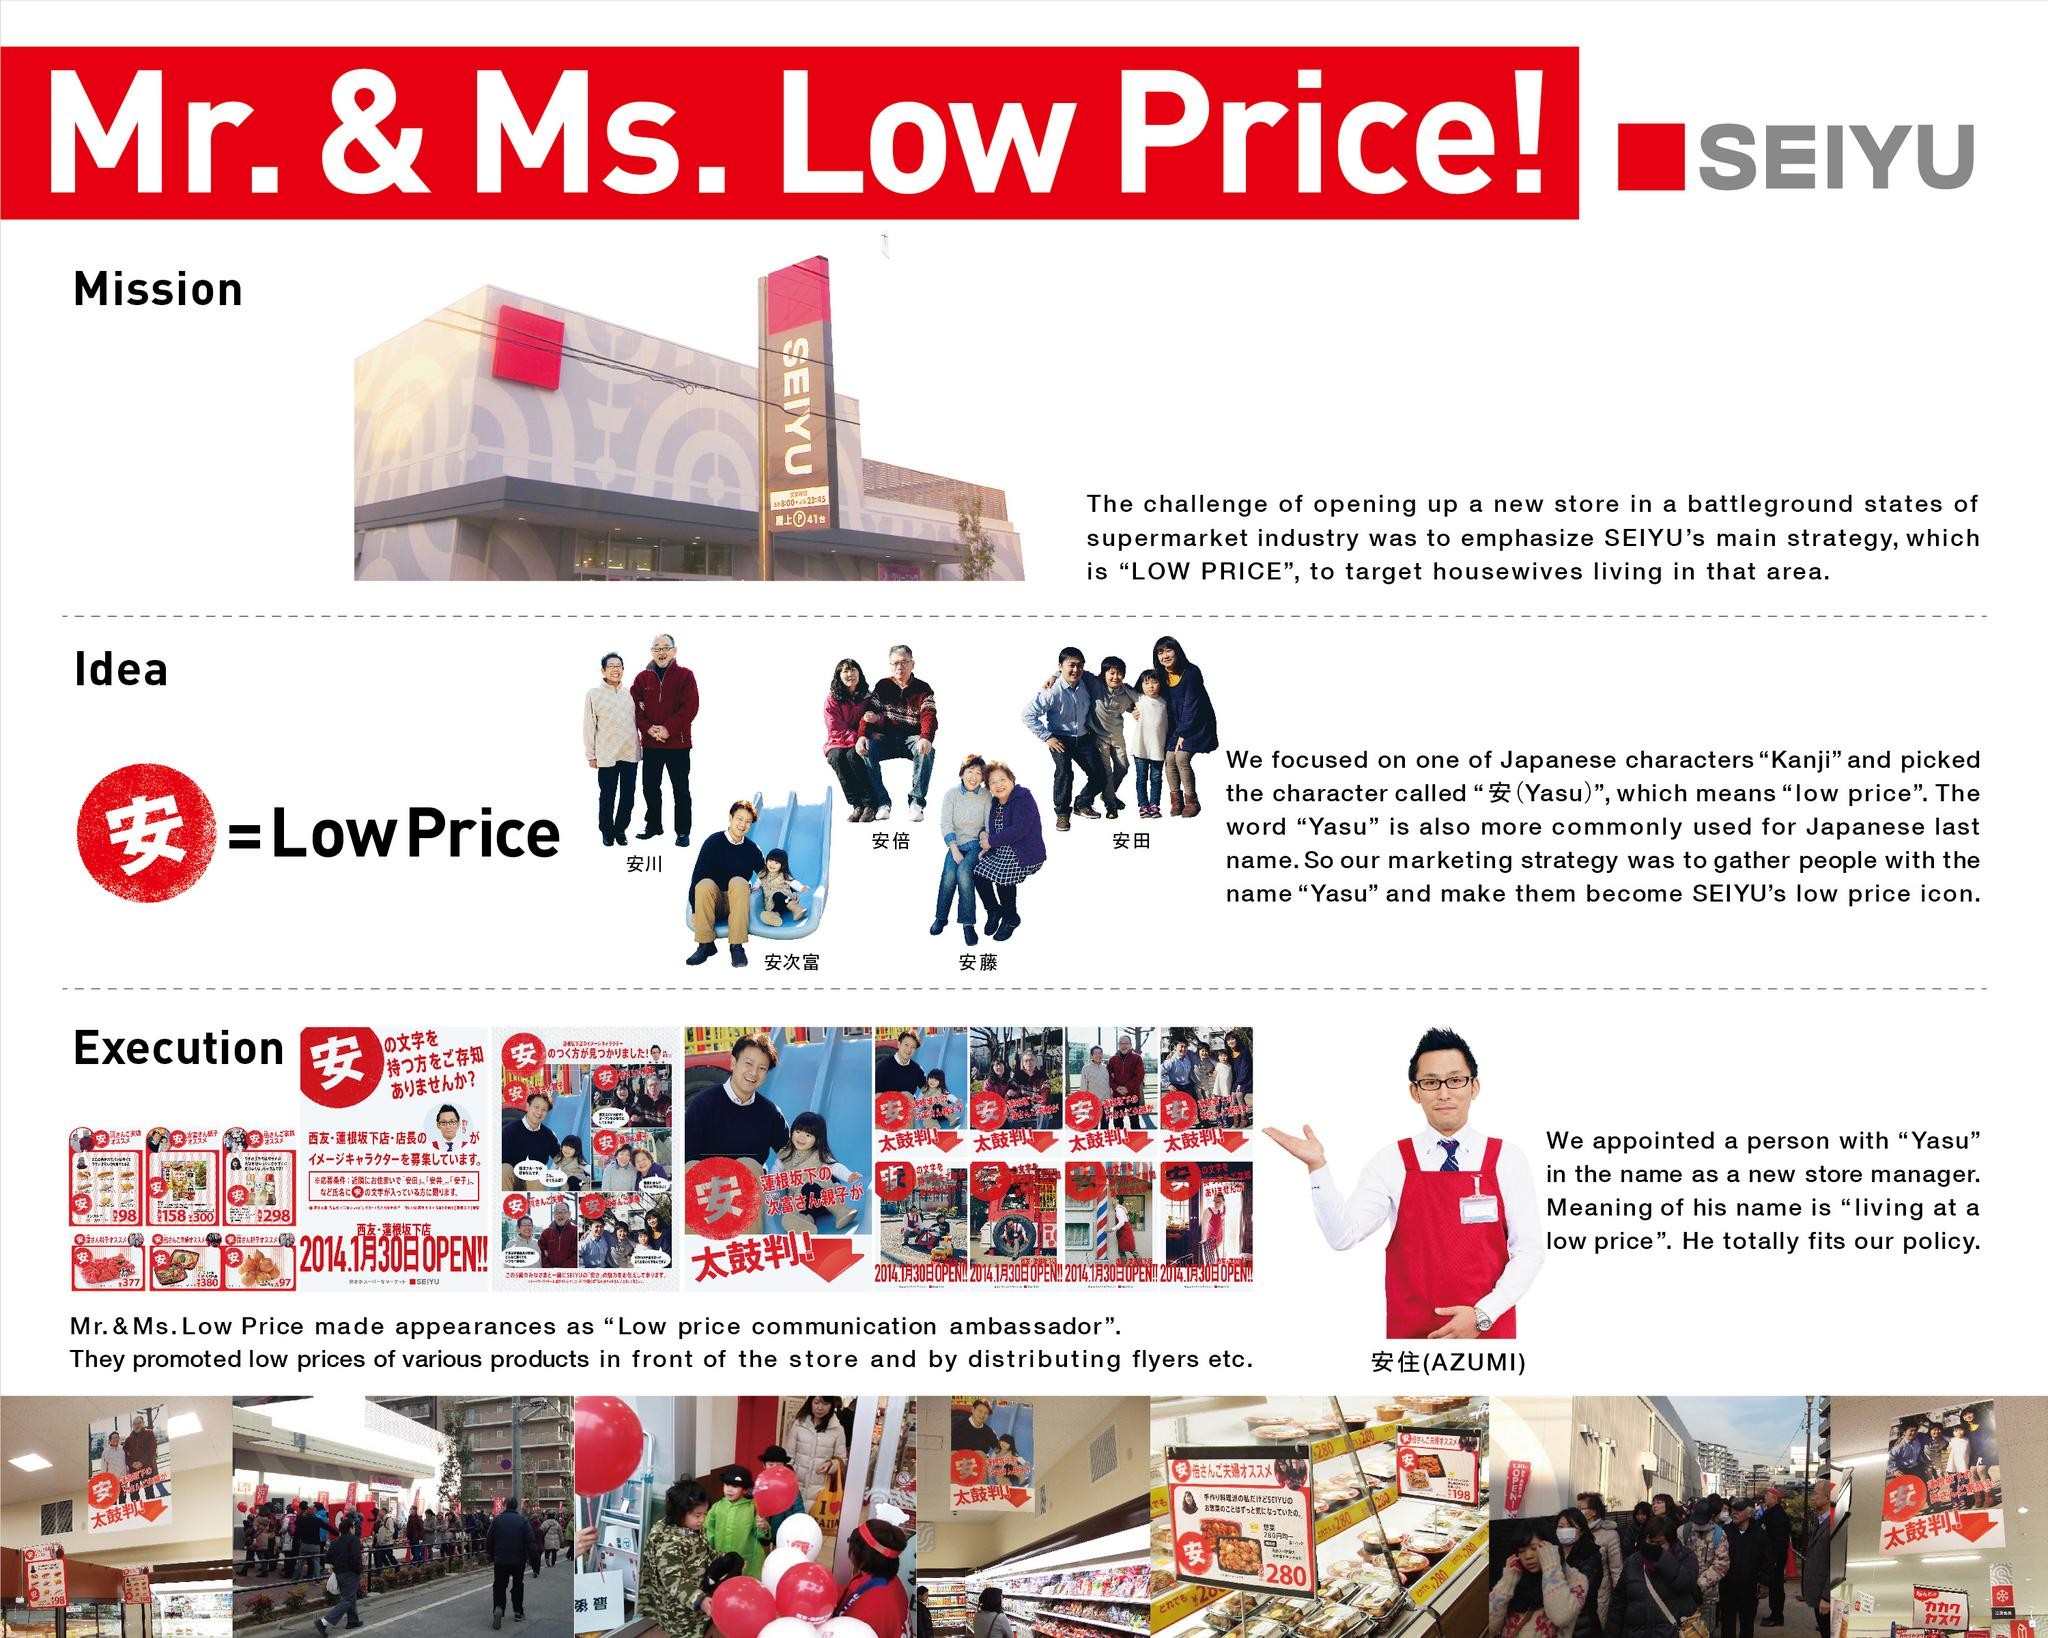 MR & MS LOW PRICE